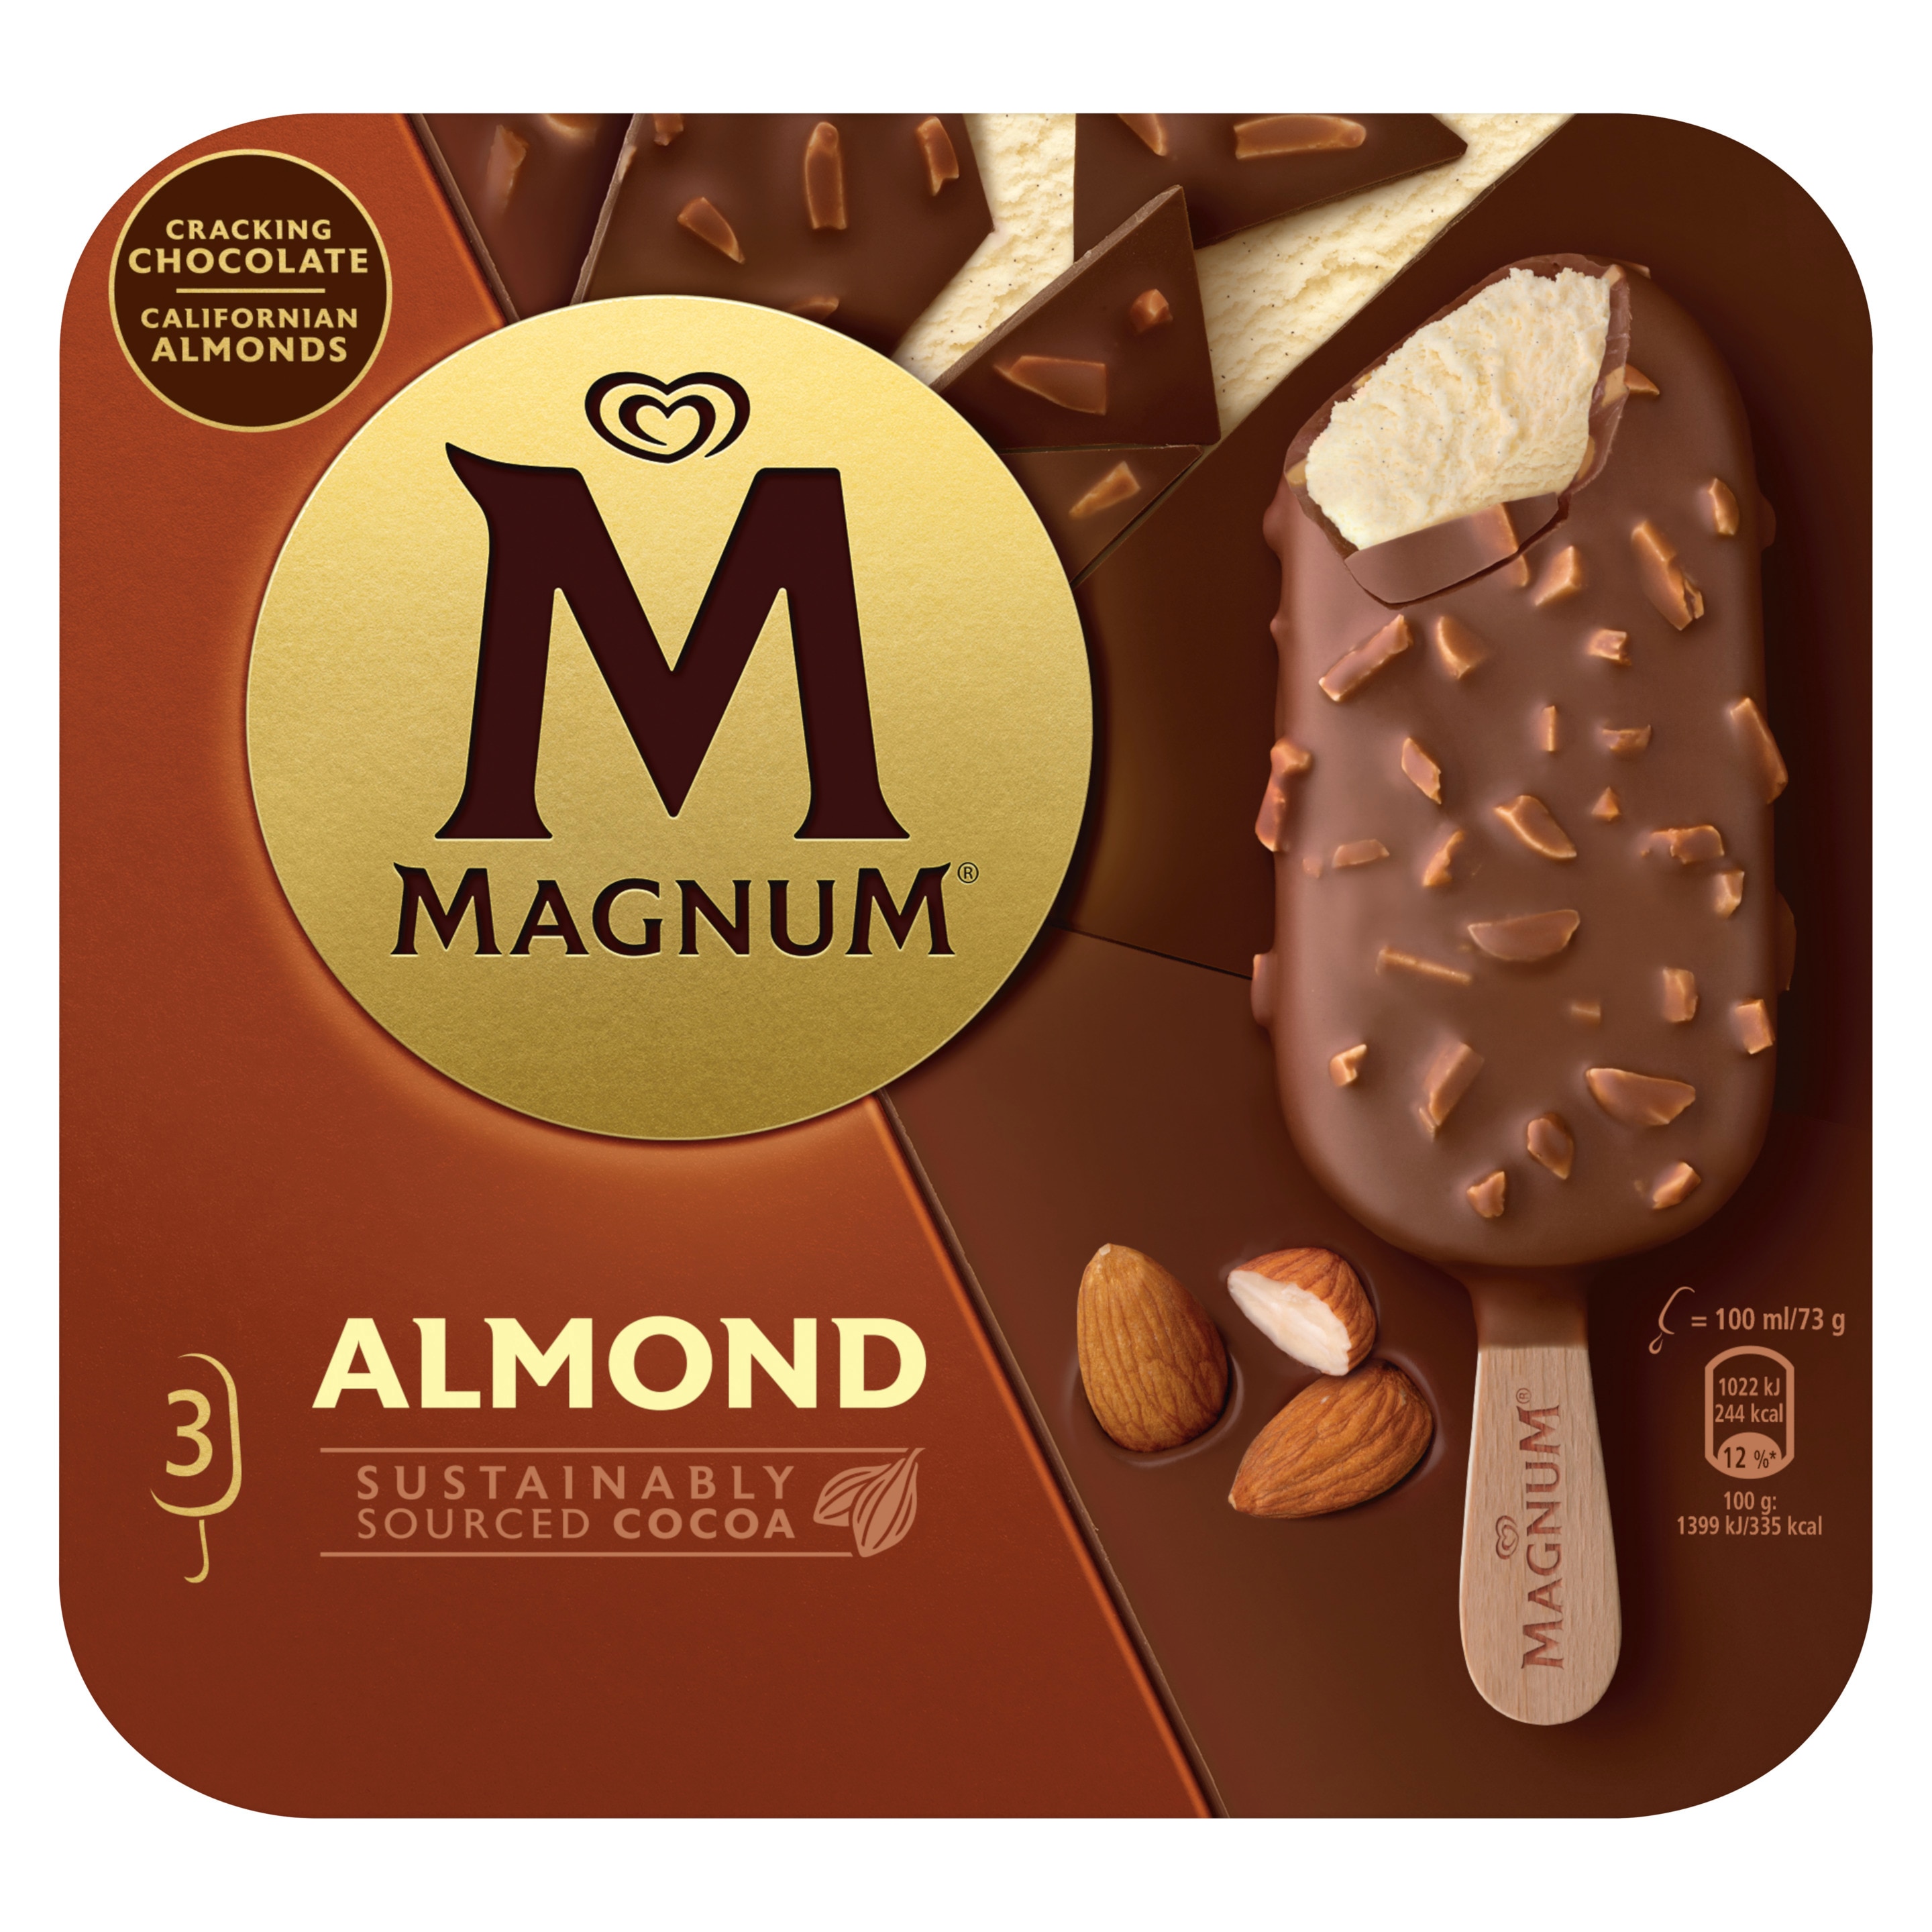 Magnum almond packaging